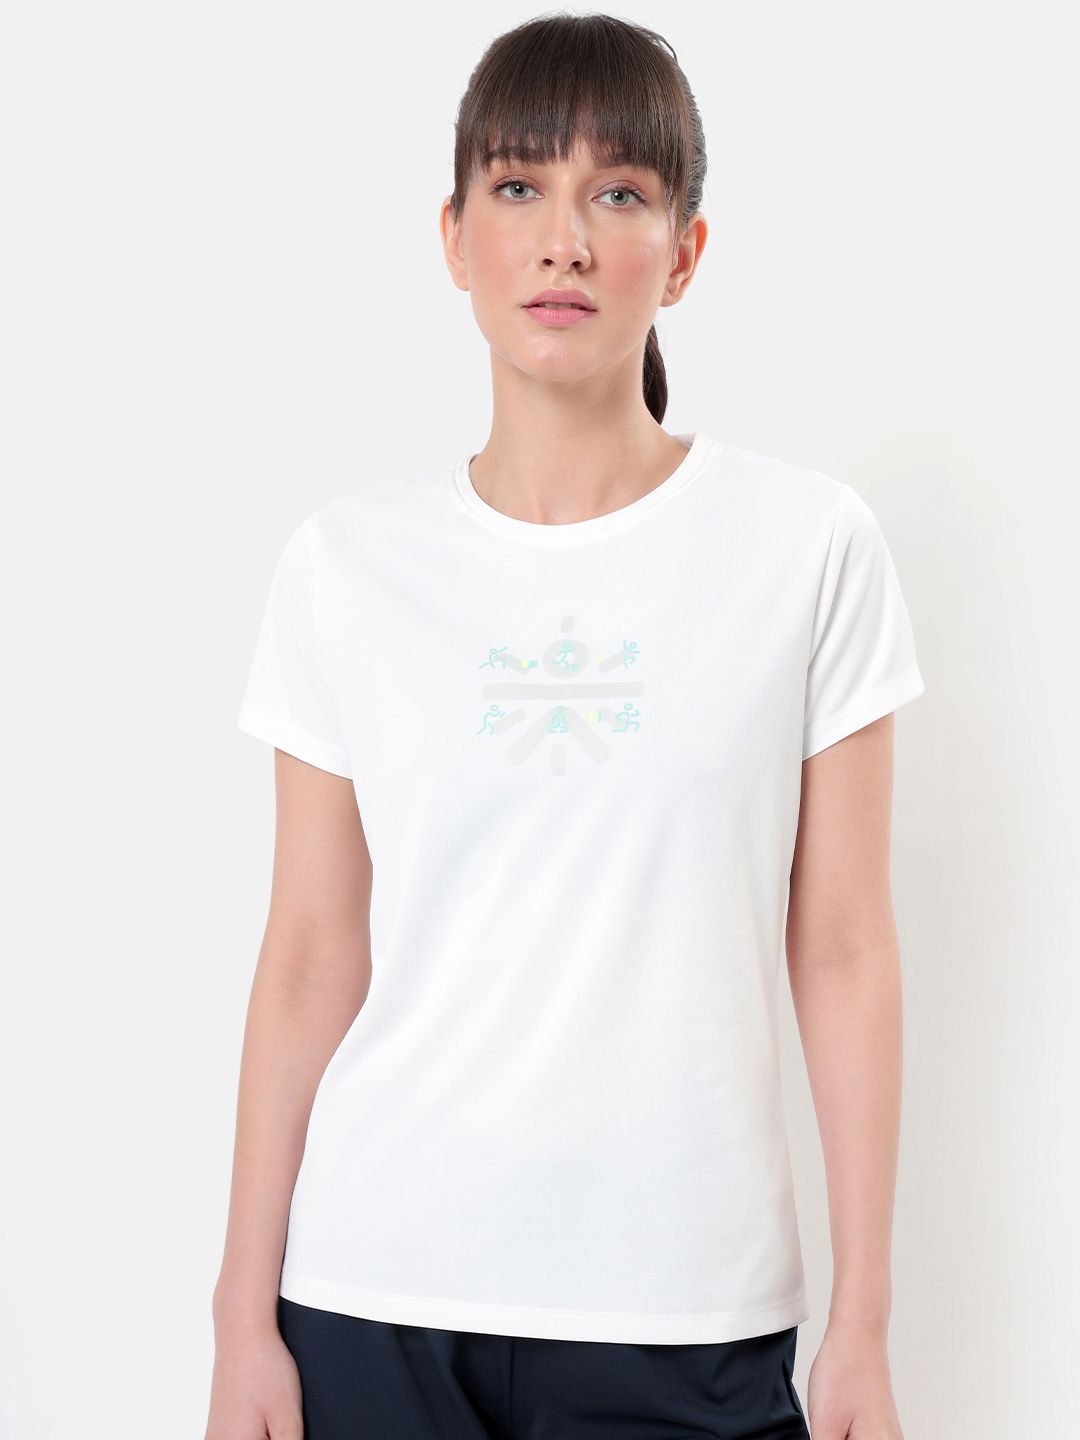 cultsportone Women White Moisture Wicking Graphic Play Performance Tshirt Price in India